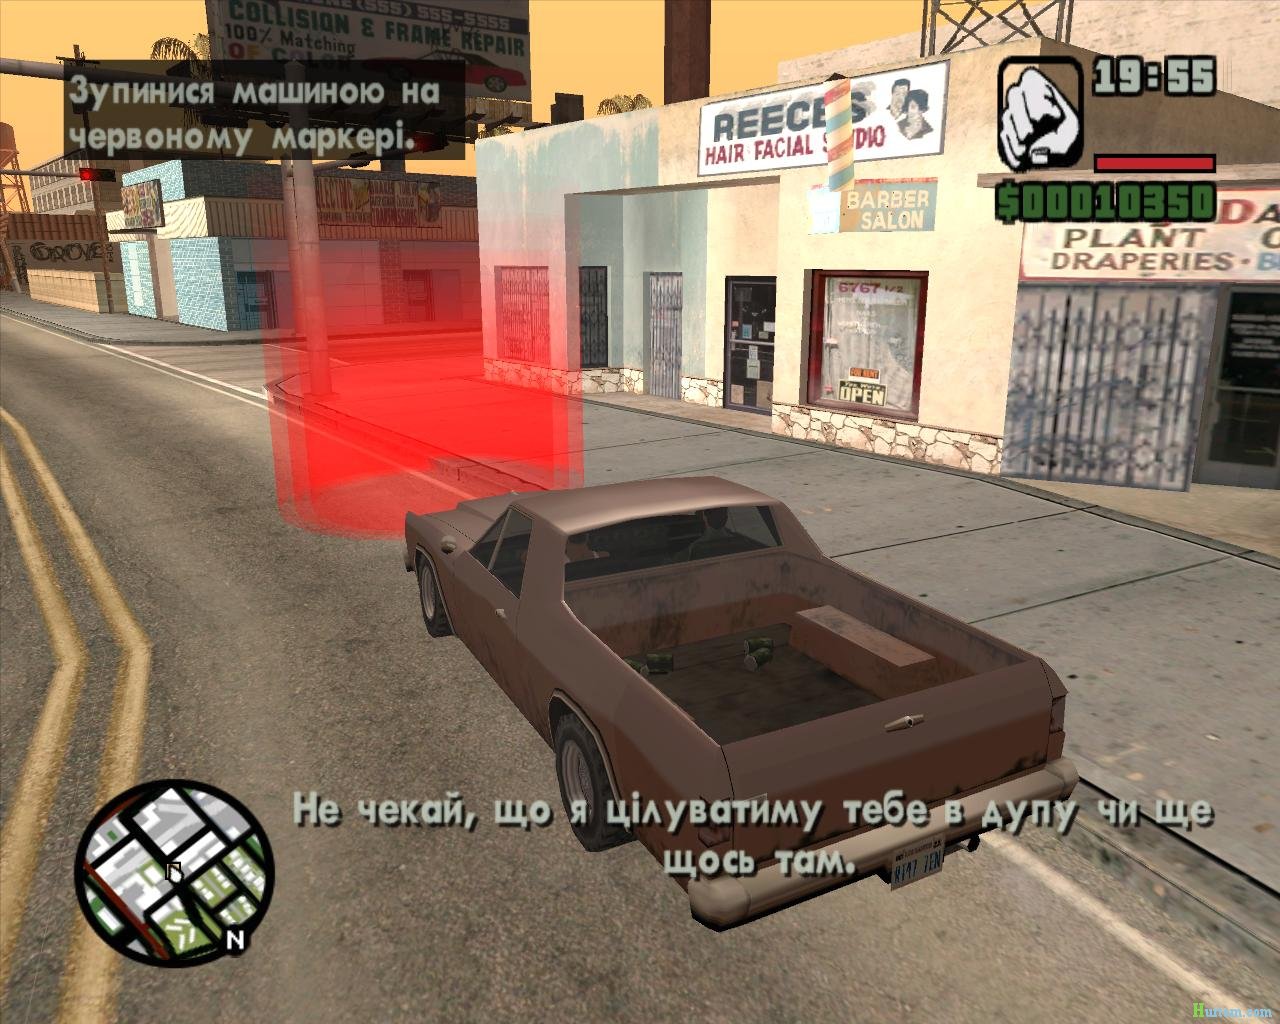 GTA San Andreas 1 GB APK obb dwonlod.com